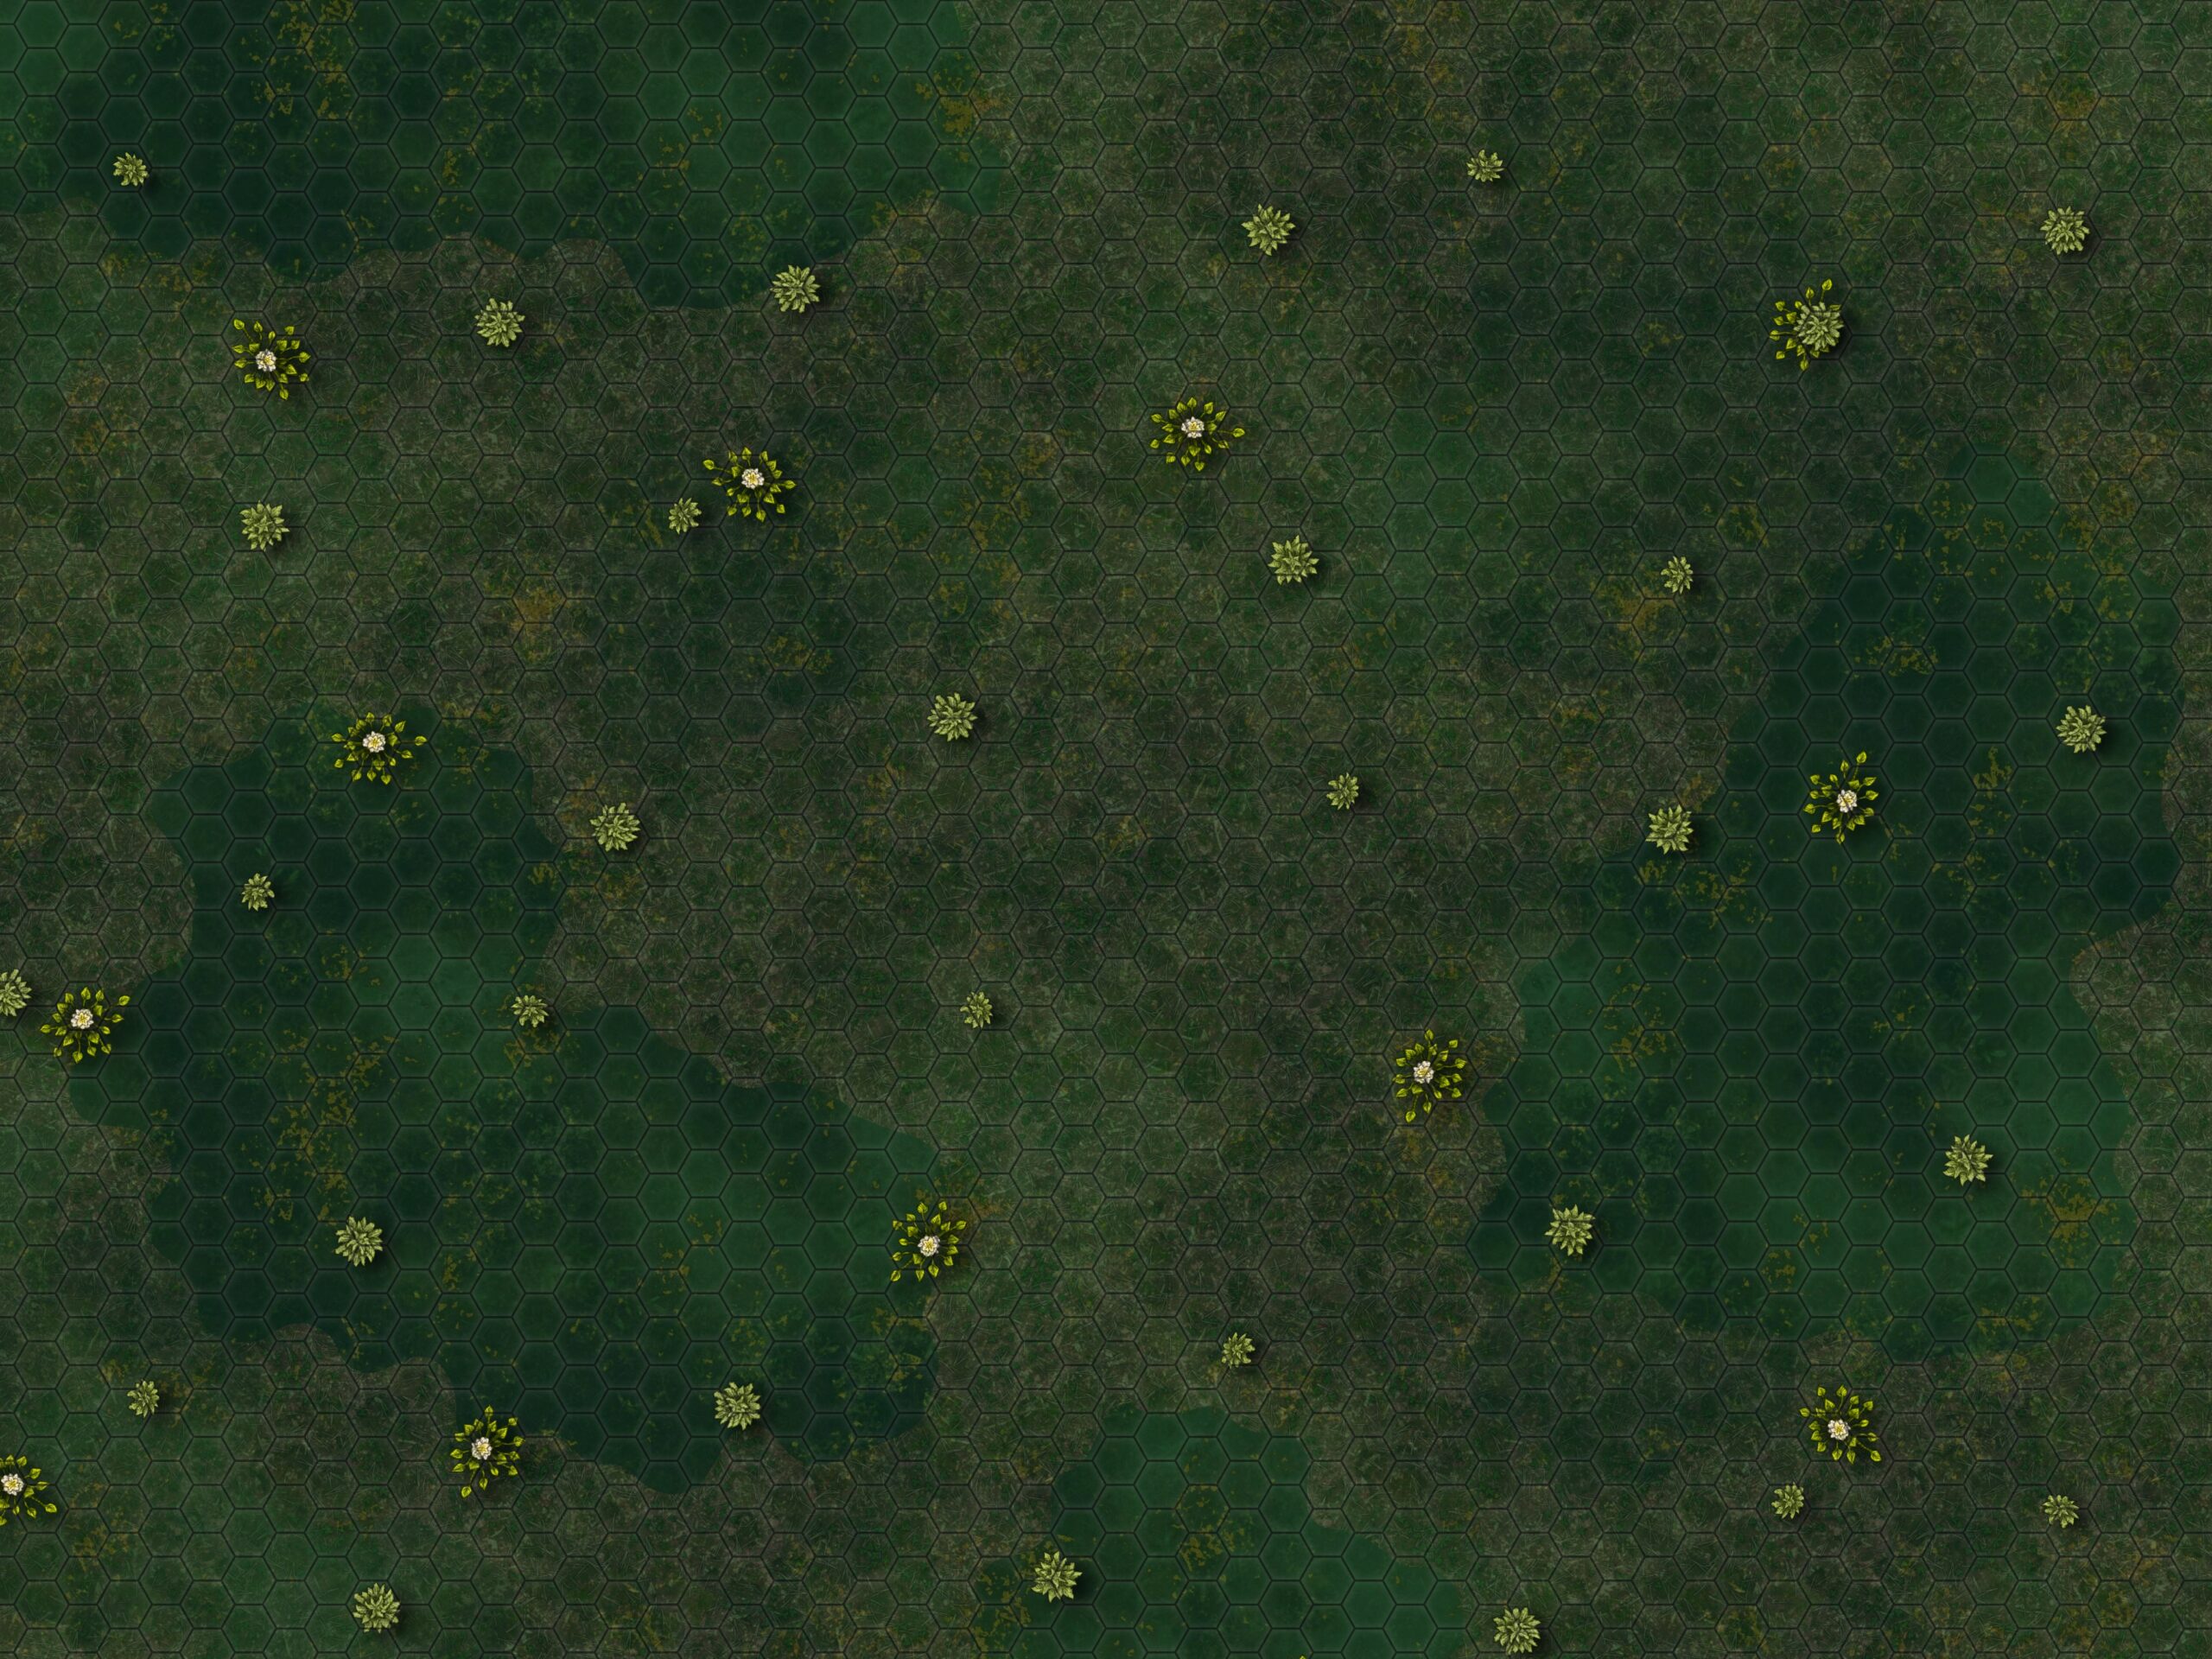 Murky Swamp hex grid